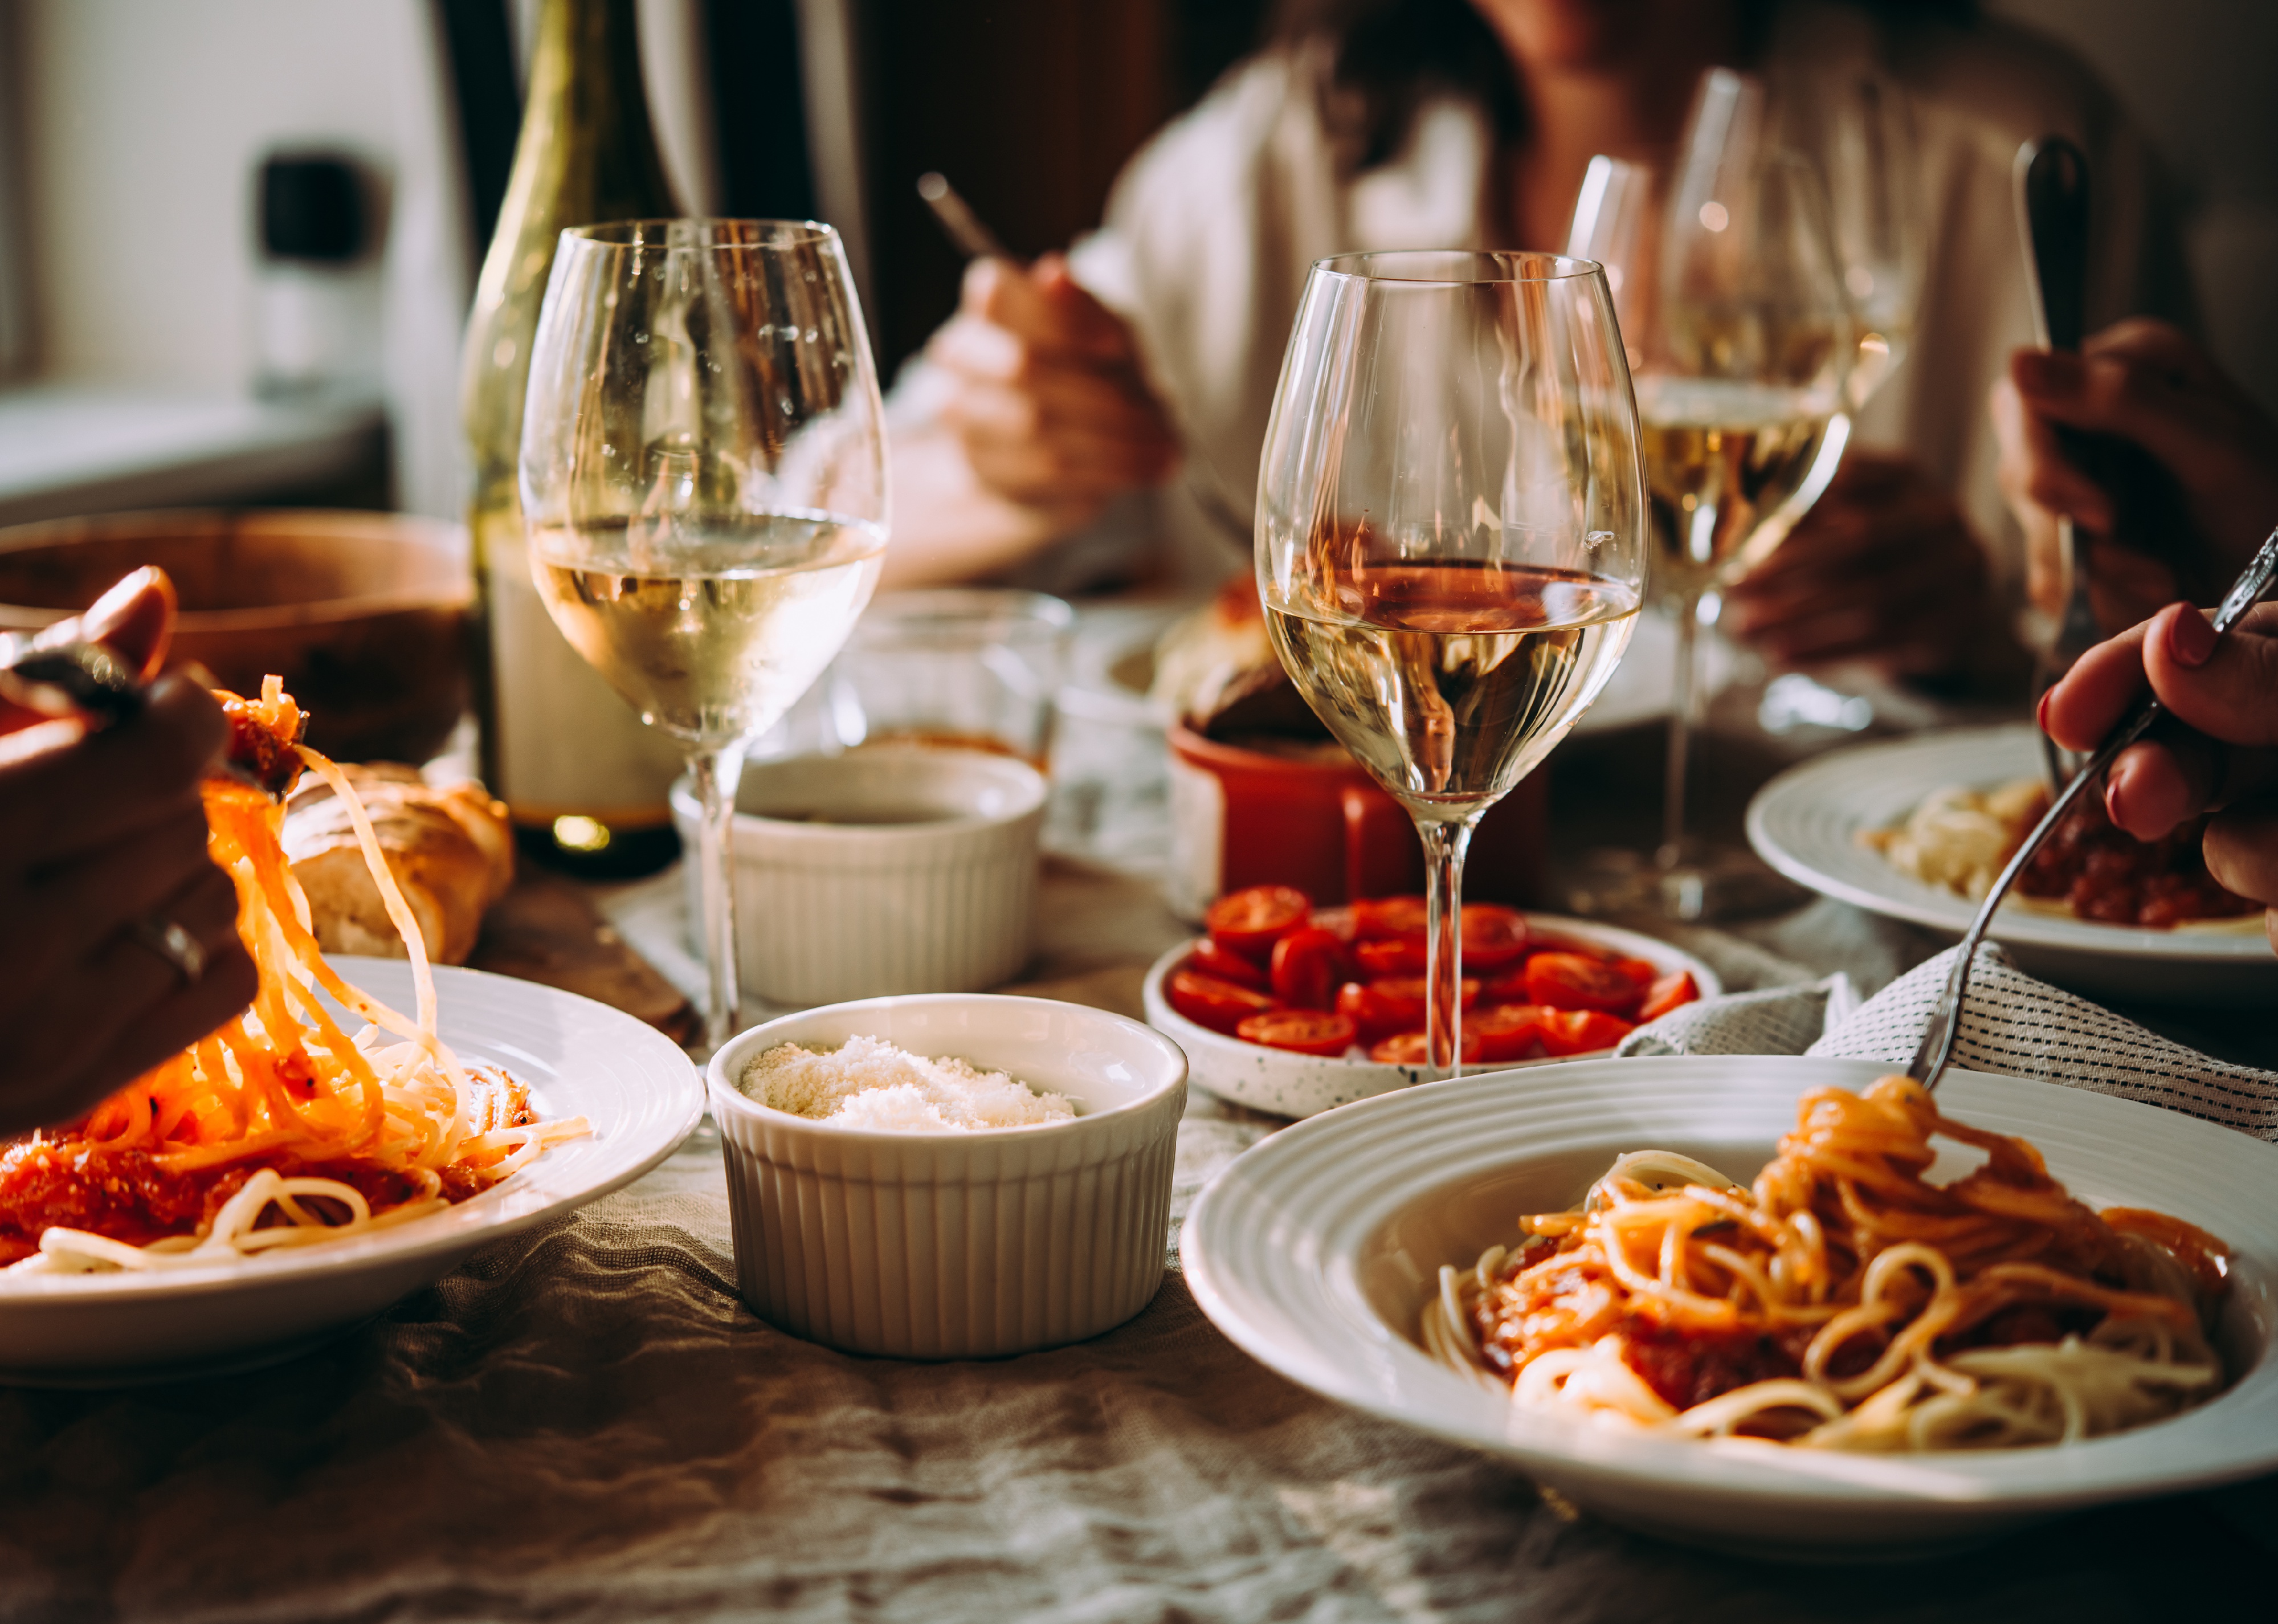 Highest-rated Italian restaurants in Washington, D.C., according to Tripadvisor